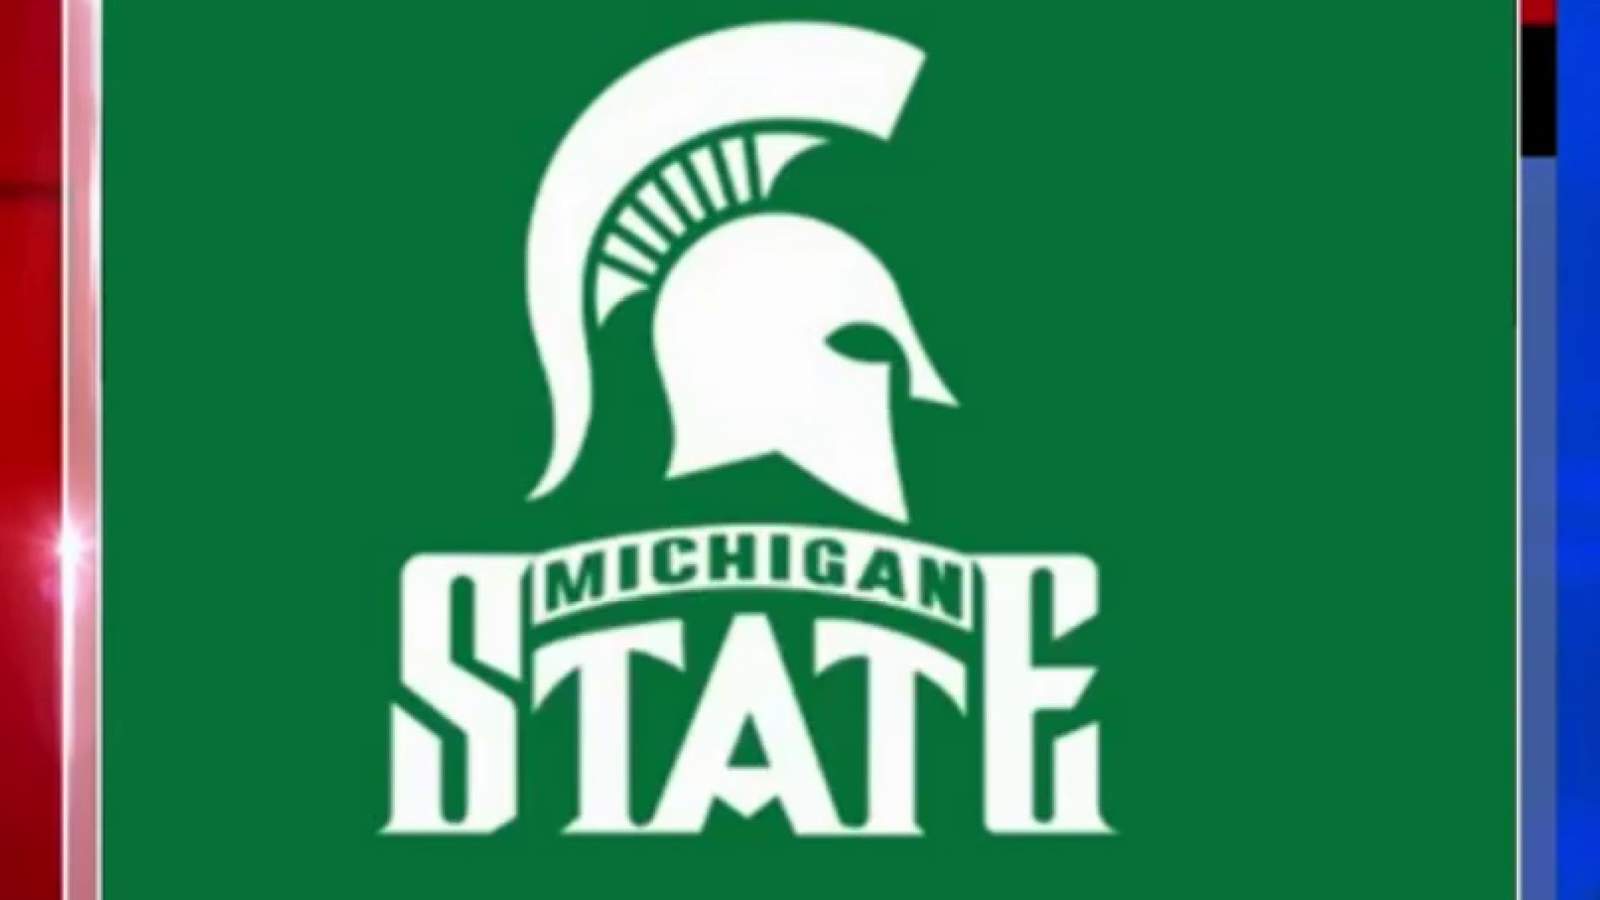 Michigan State University to start undergraduate classes online in fall semester